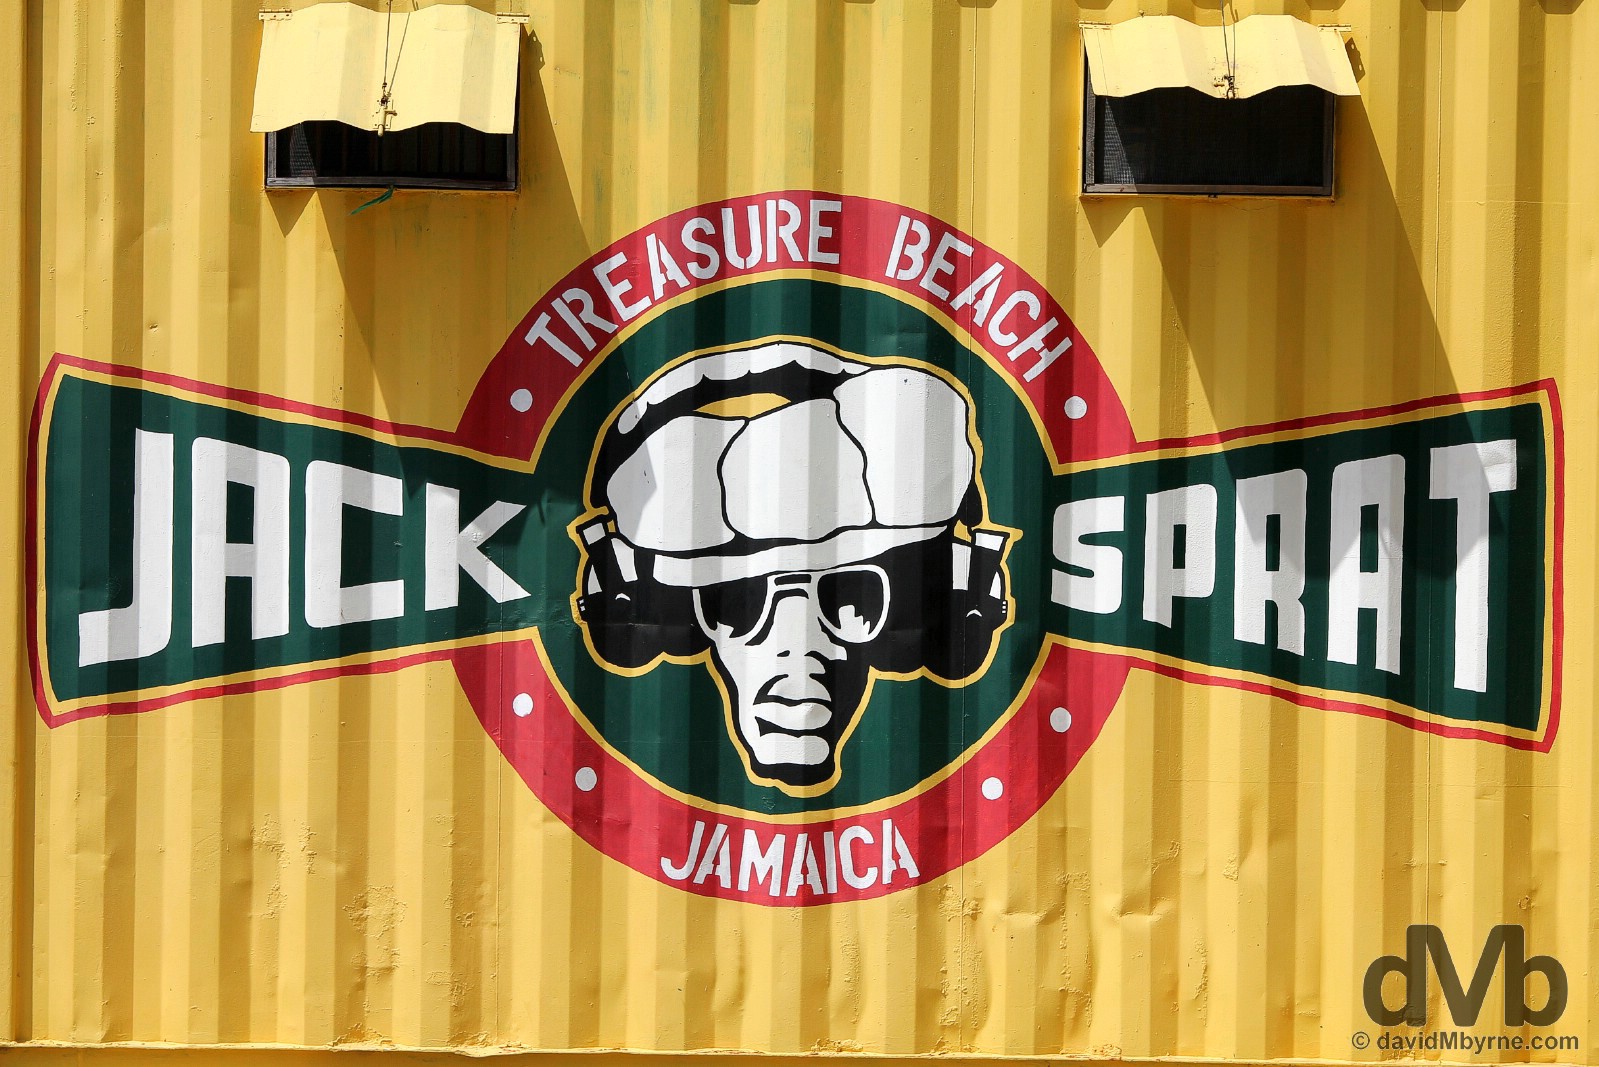 Jack Sprat, Treasure Beach, Jamaica. May 13, 2015.